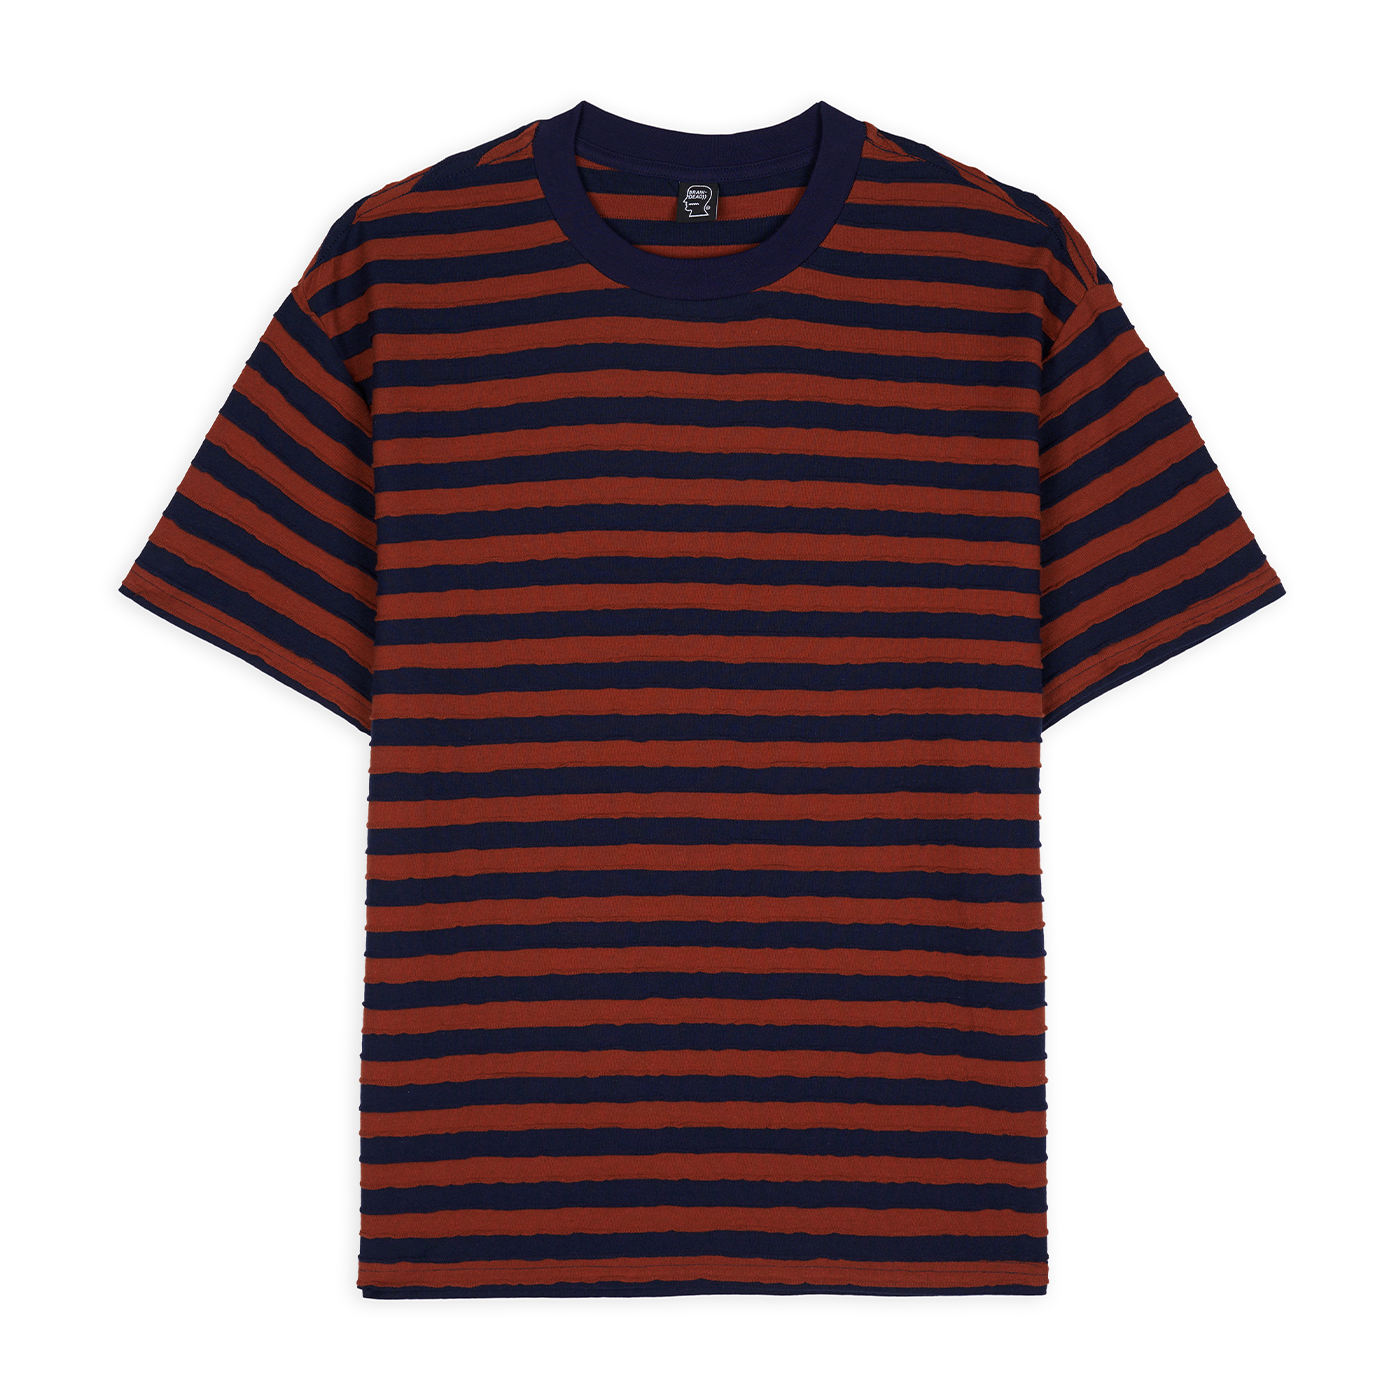 Denny Blaine Striped T-shirt